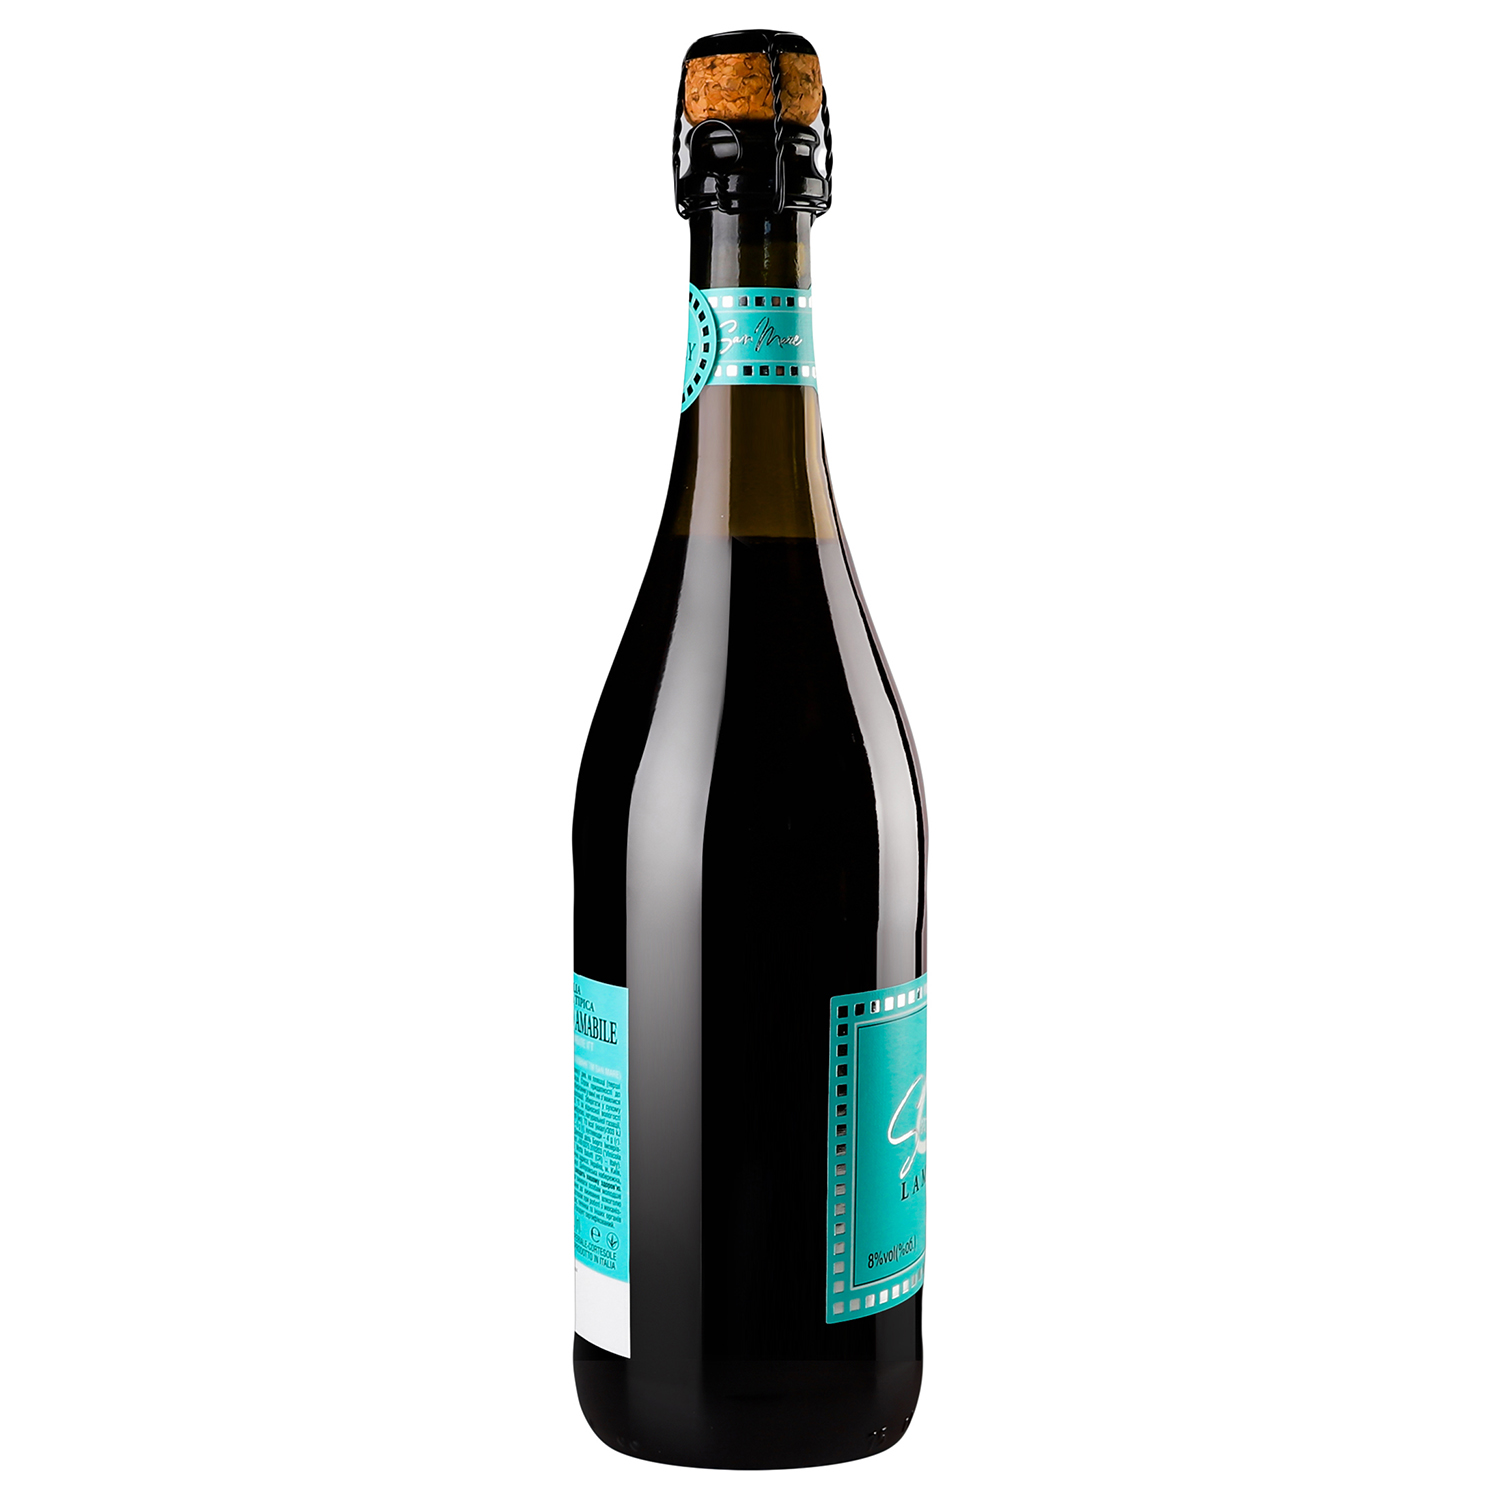 Вино игристое San Mare Lambrusco dell'Emilia Rosso, красное, полусладкое, 8%, 0,75 л - фото 3